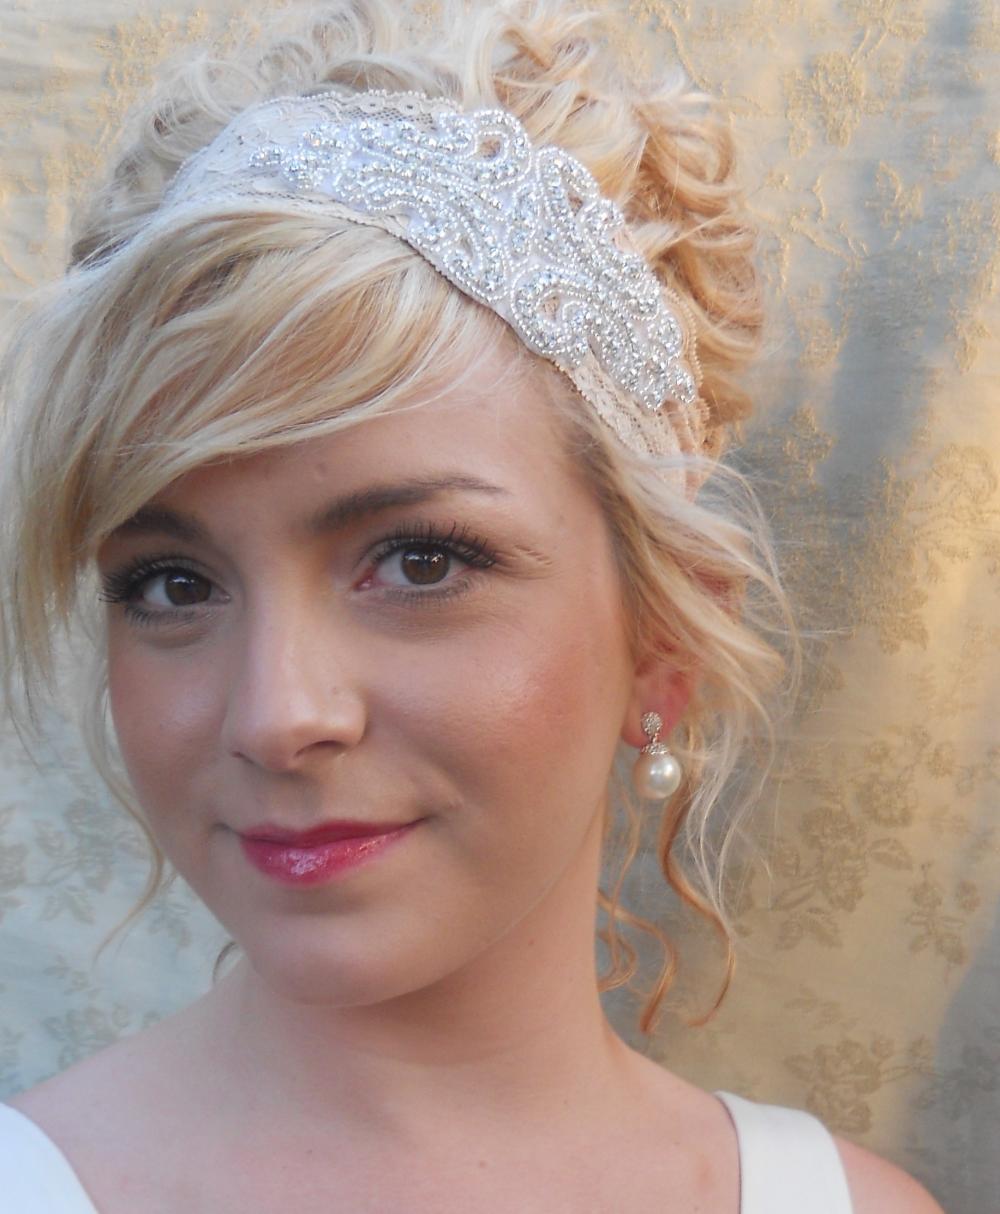 Annabelle Stretch Lace Brides Wedding Occasion Headband With Large Crystal Rhinestone Embellishment